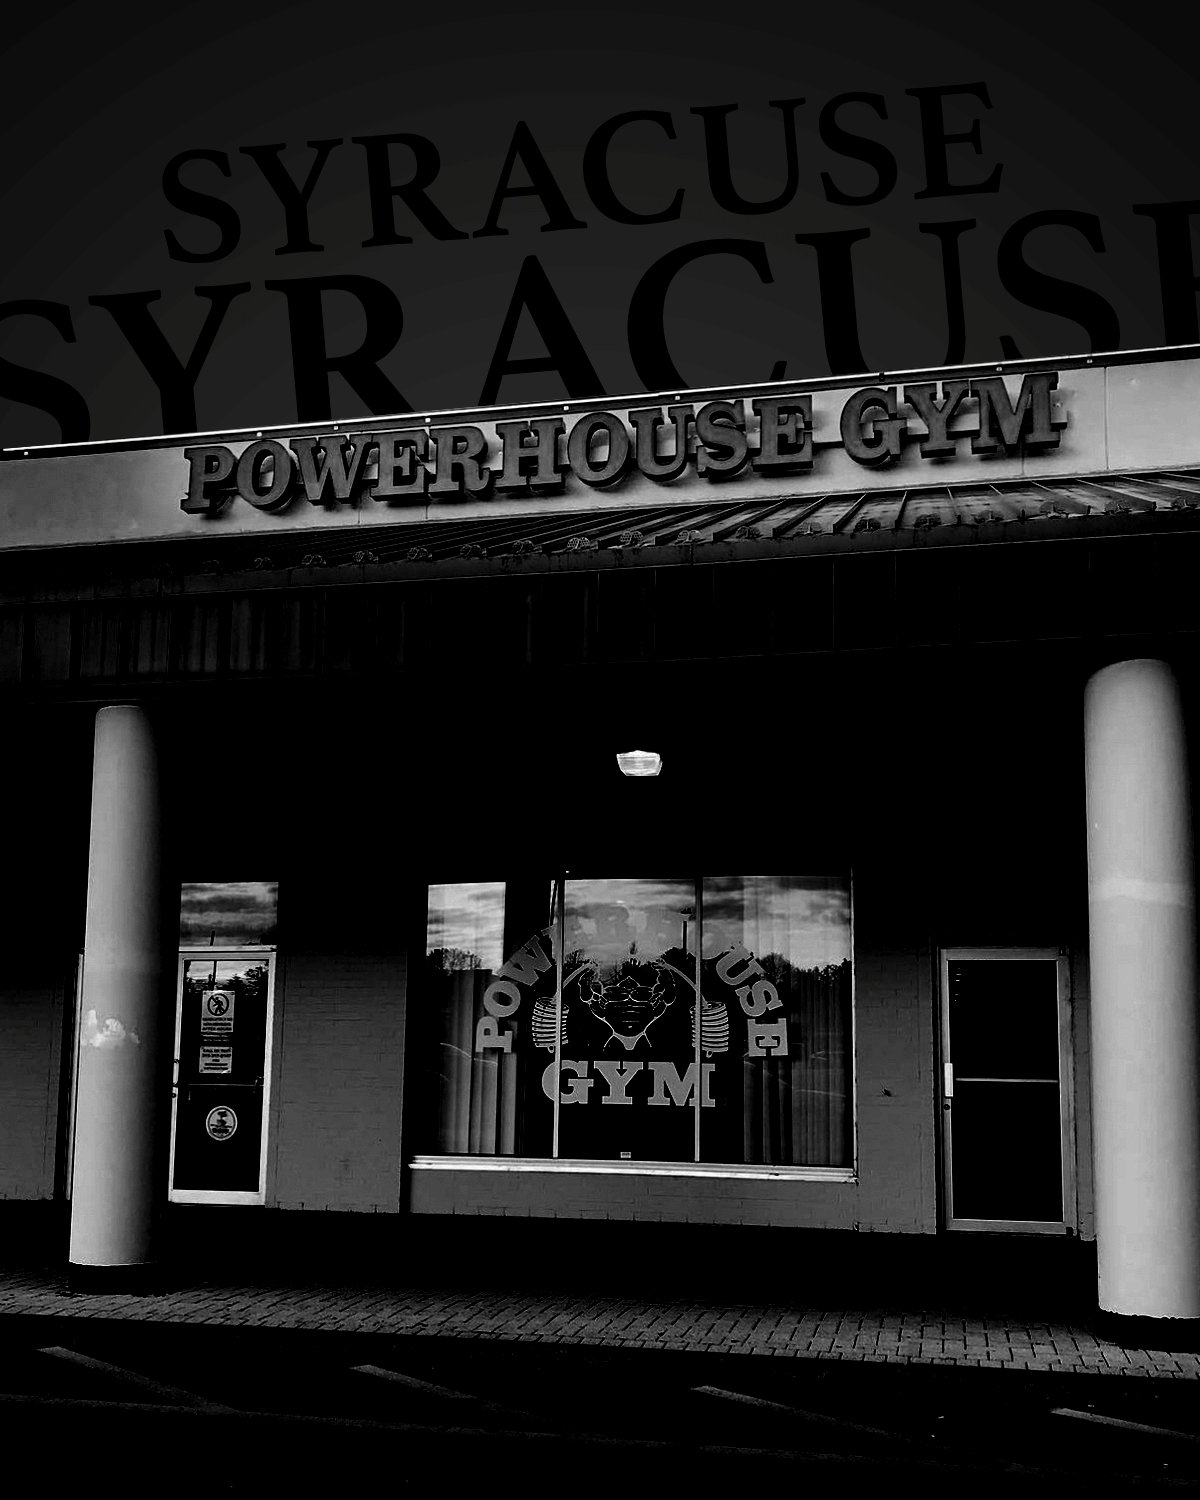 An Image of the Syracuse, NY Powerhouse Gym Location